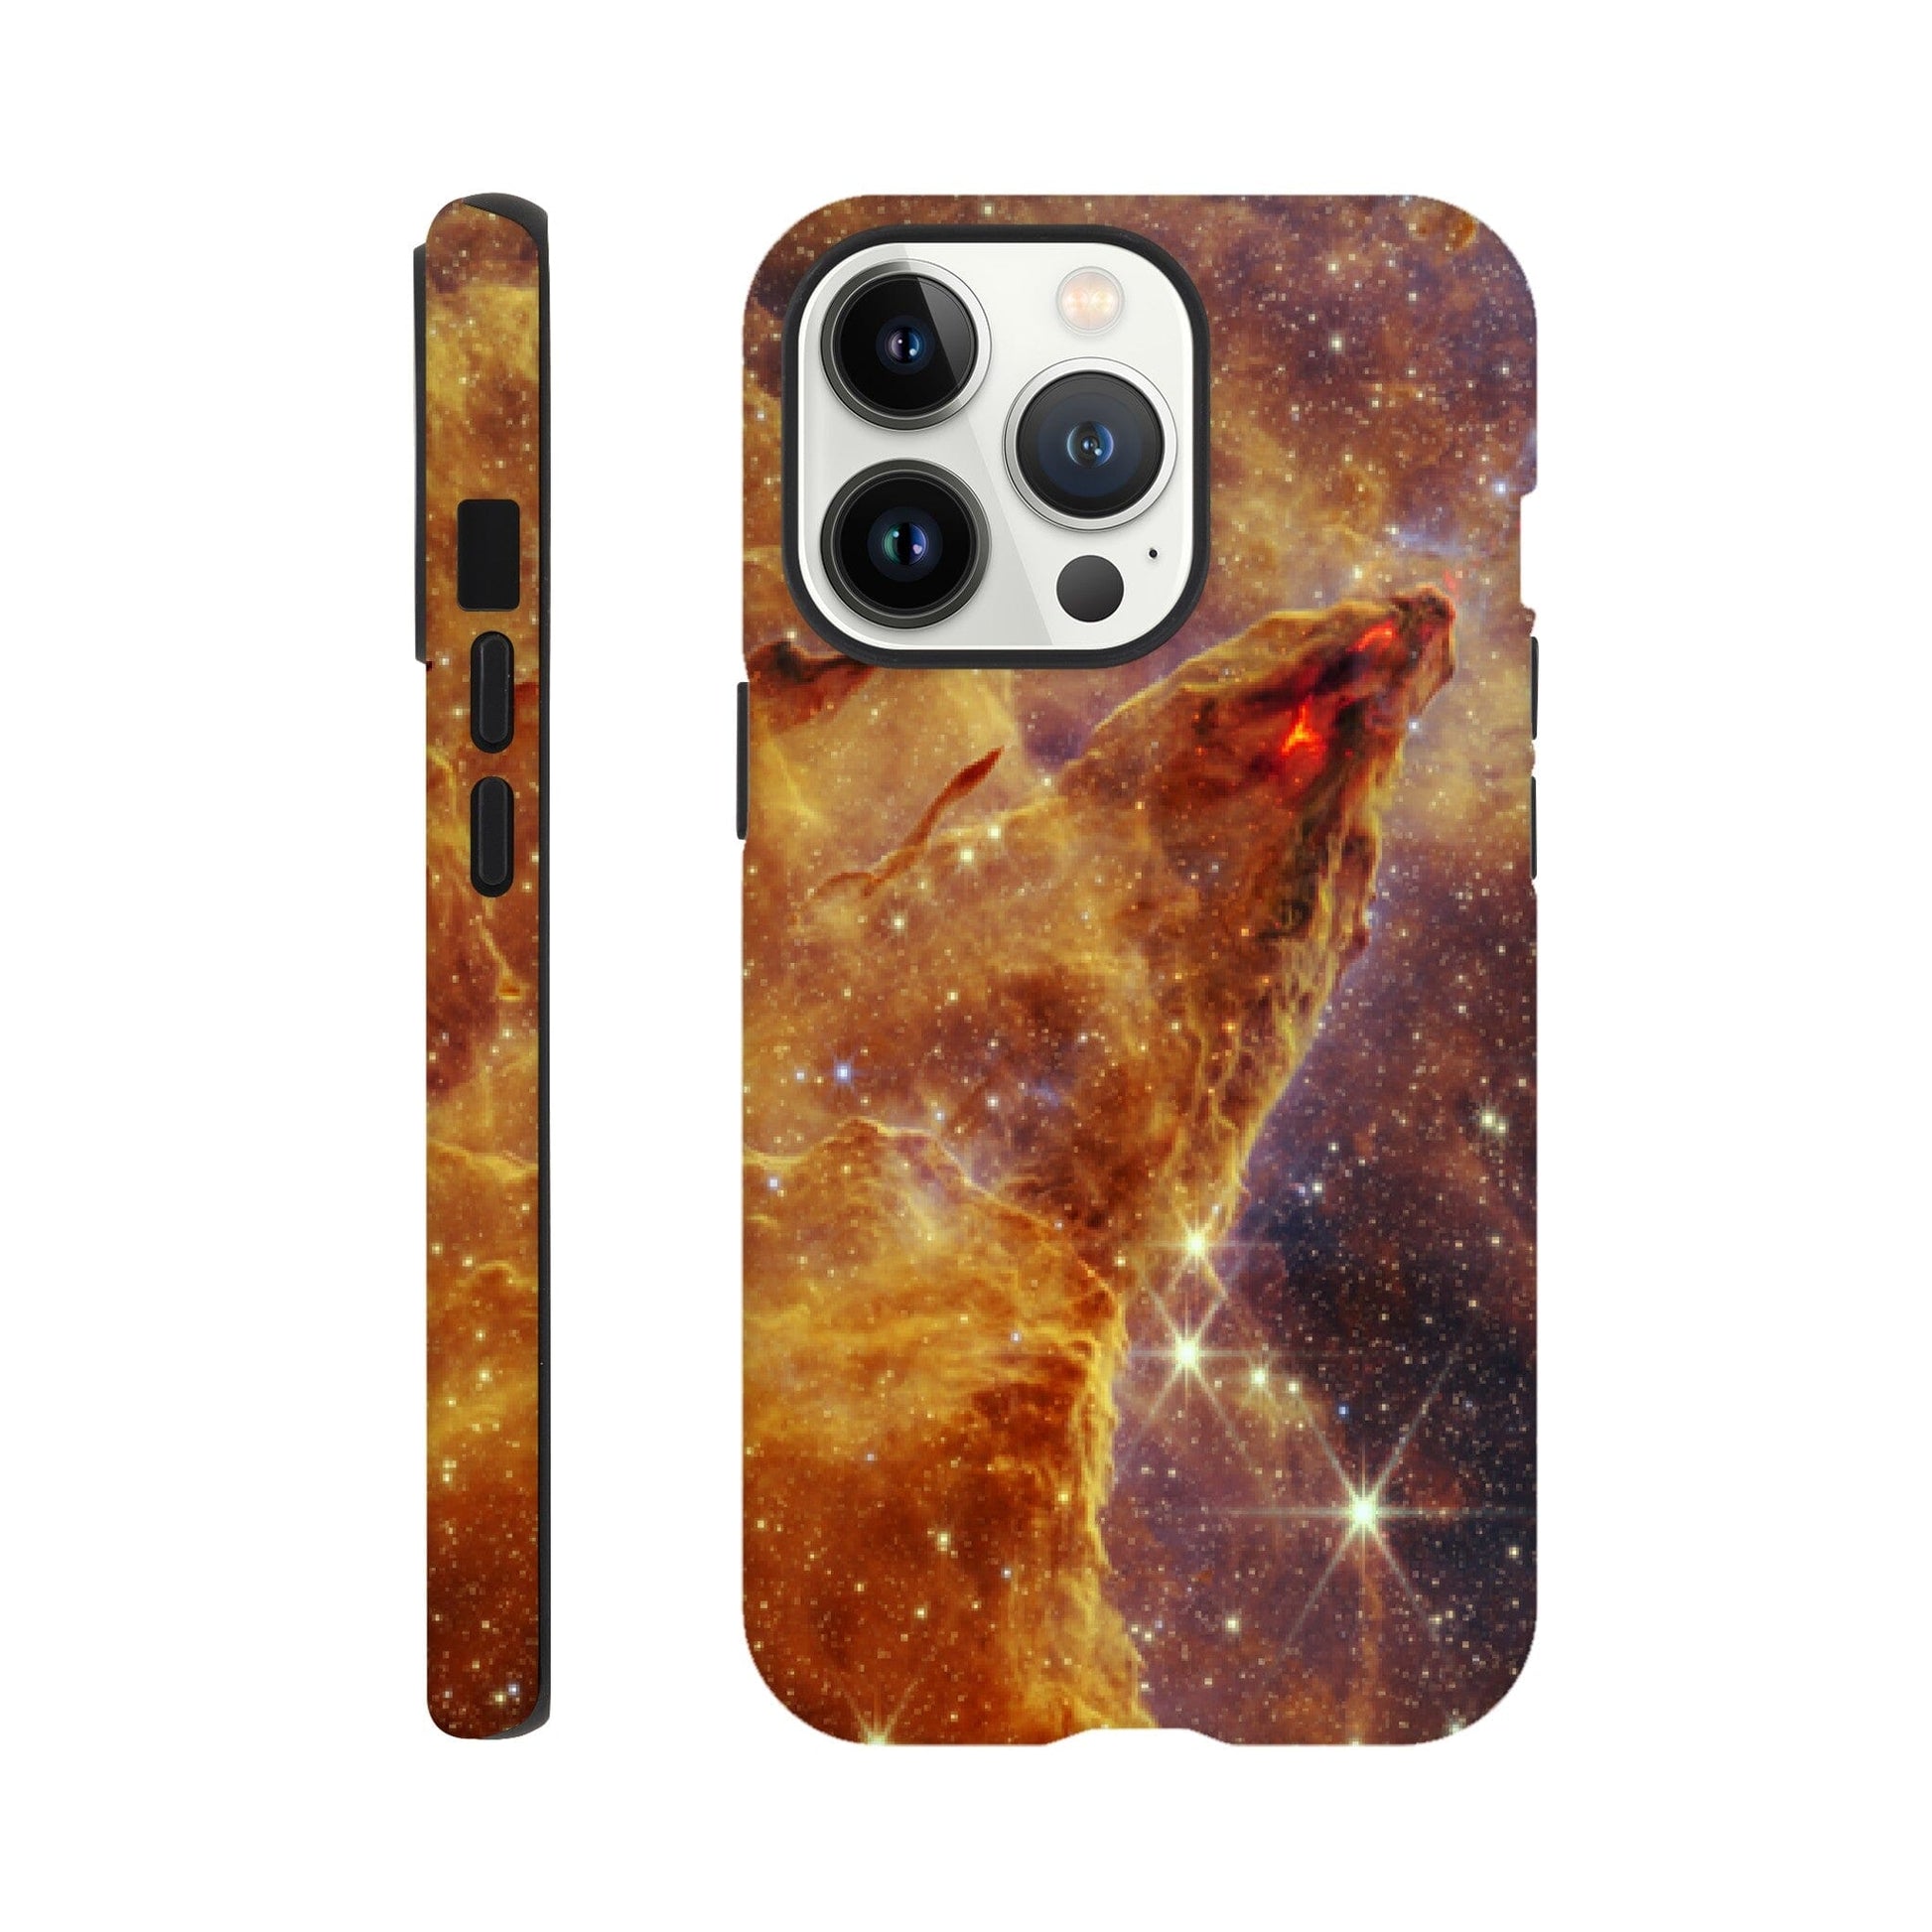 NASA - Phone Case Tough - 9. Pillars of Creation (NIRCam Image) - James Webb Space Telescope Phone Case TP Aviation Art iPhone 13 Pro 